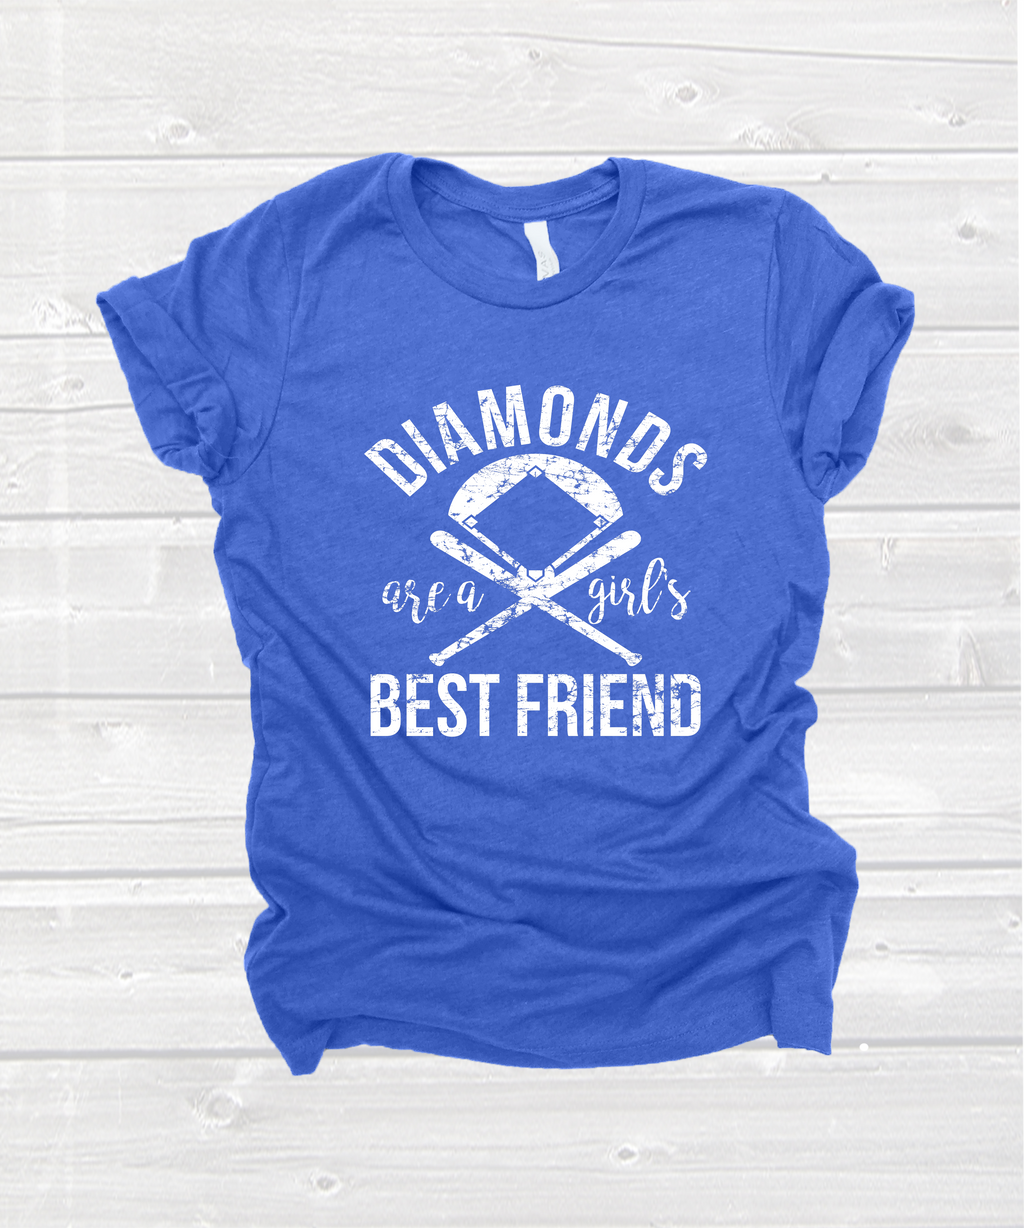 "diamonds are a girl's best friend" tee in heather blue